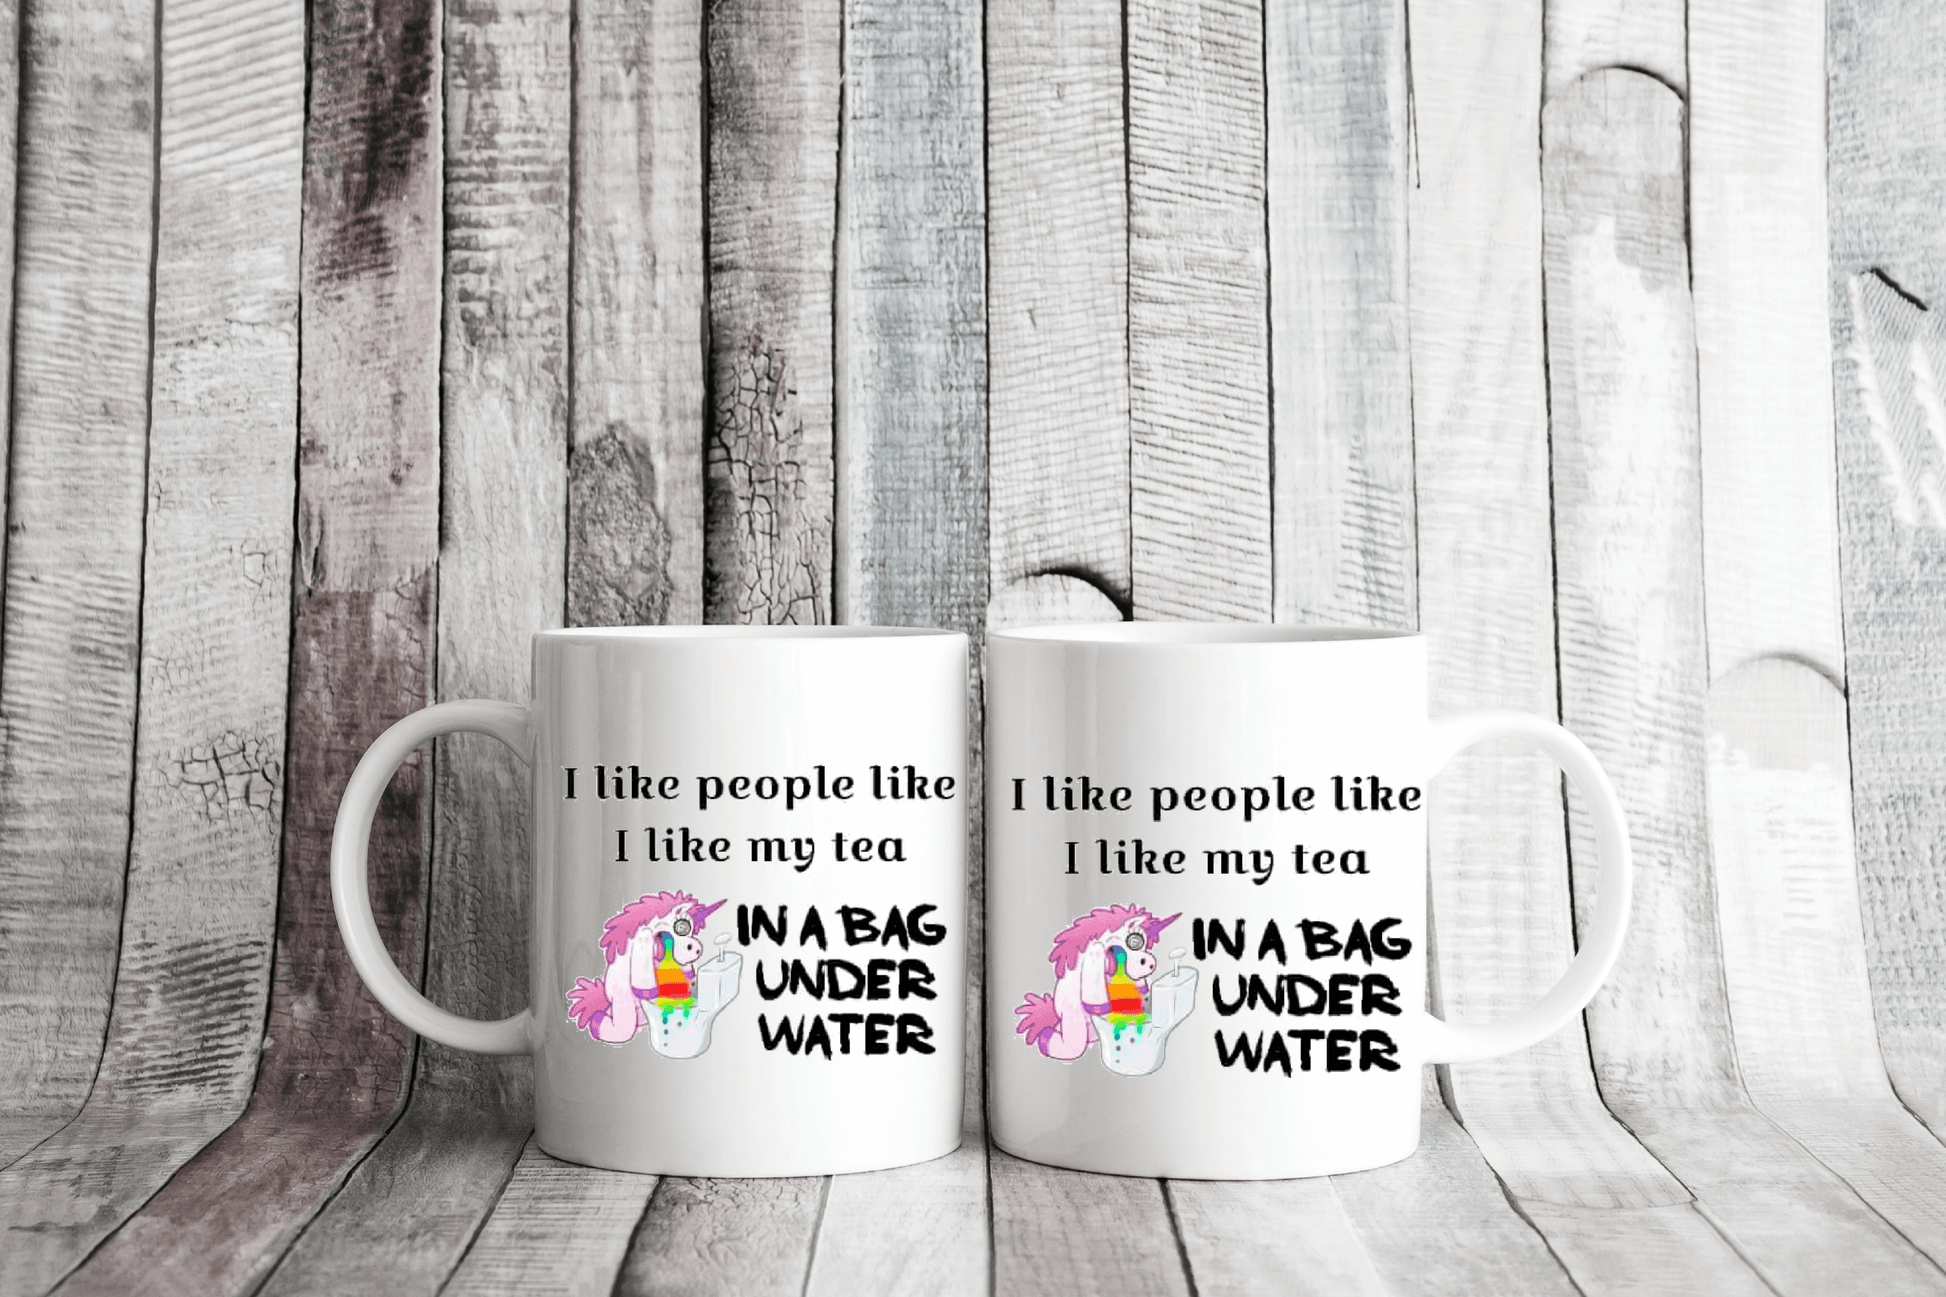  Funny I Like My People Like I Like My Tea Mug by Free Spirit Accessories sold by Free Spirit Accessories